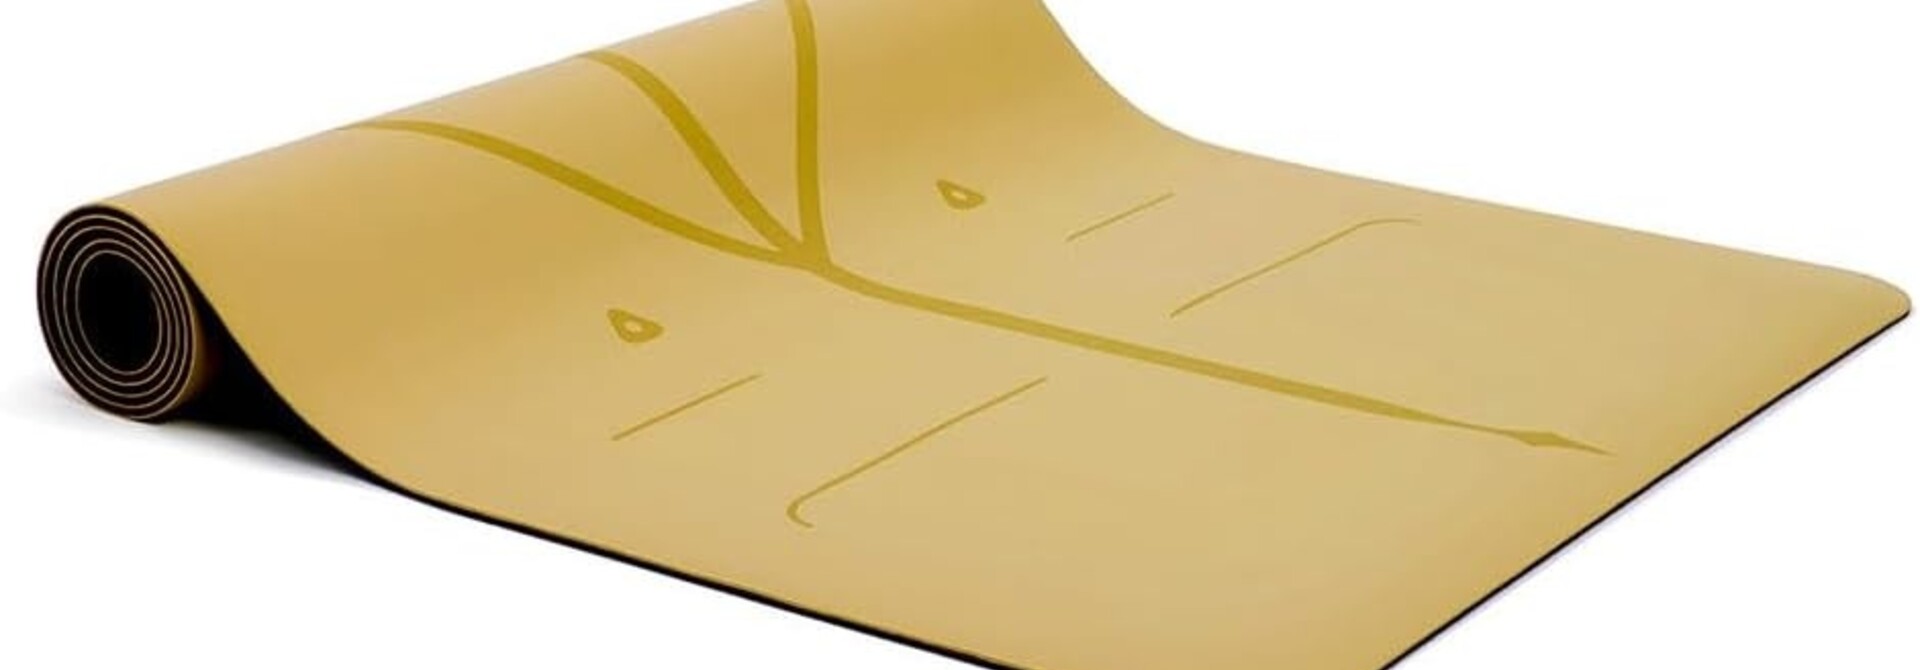 Liforme Yogamat - Golden Sand